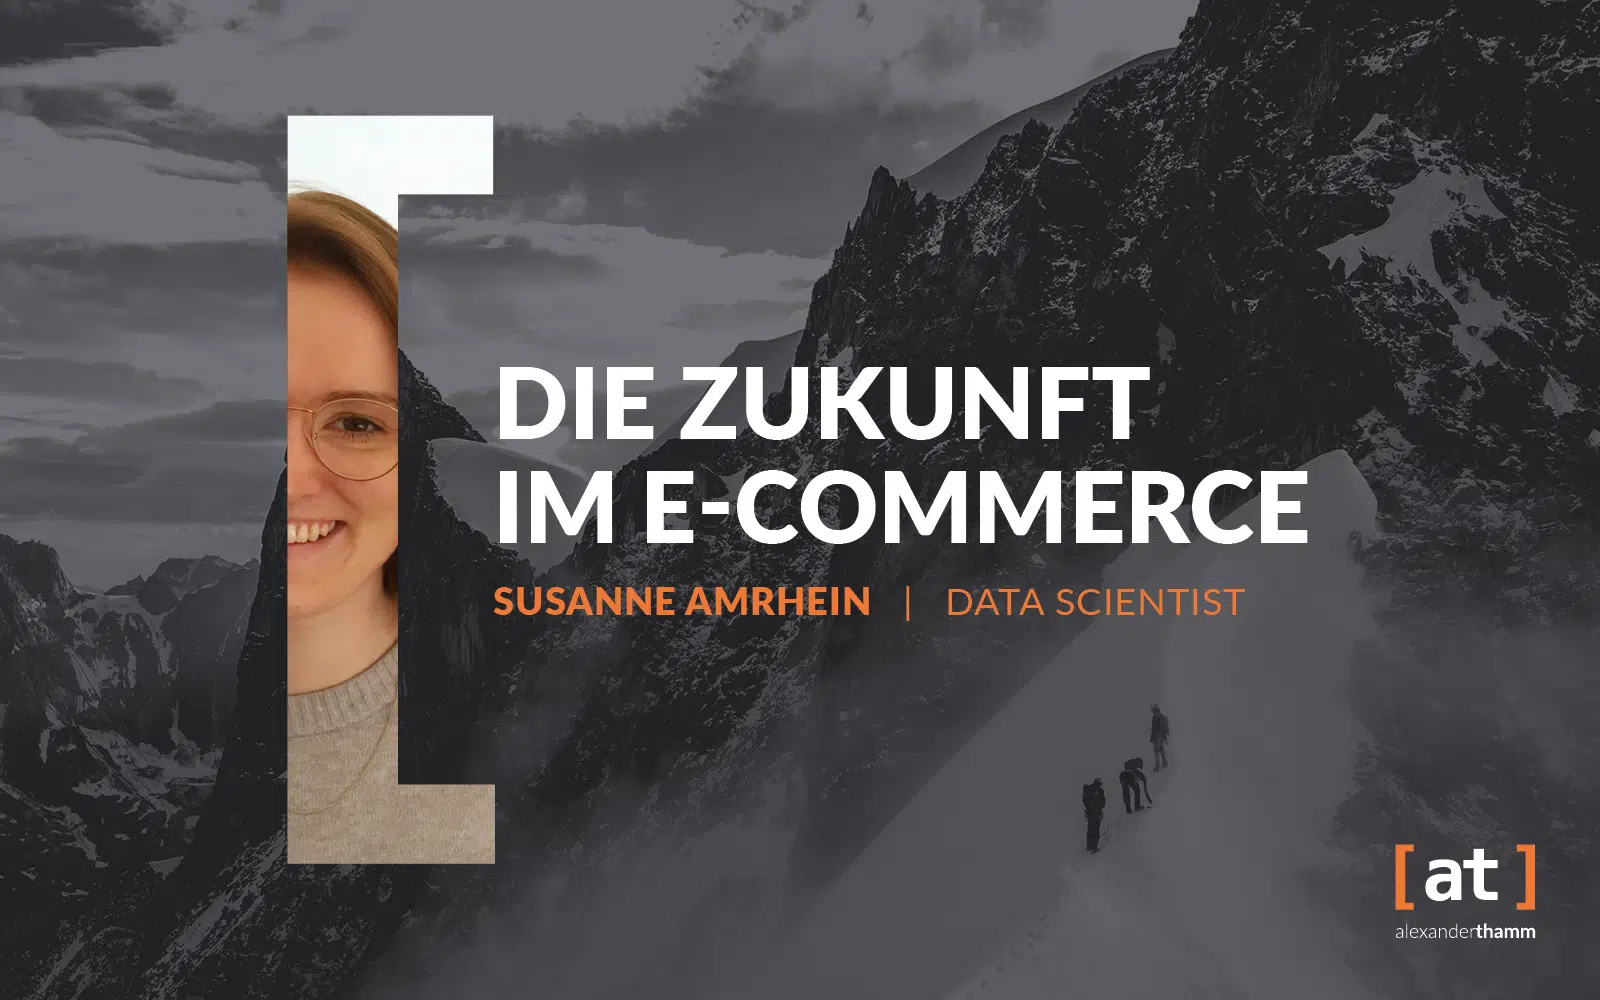 The future in e-commerce - Susanne Amrhein